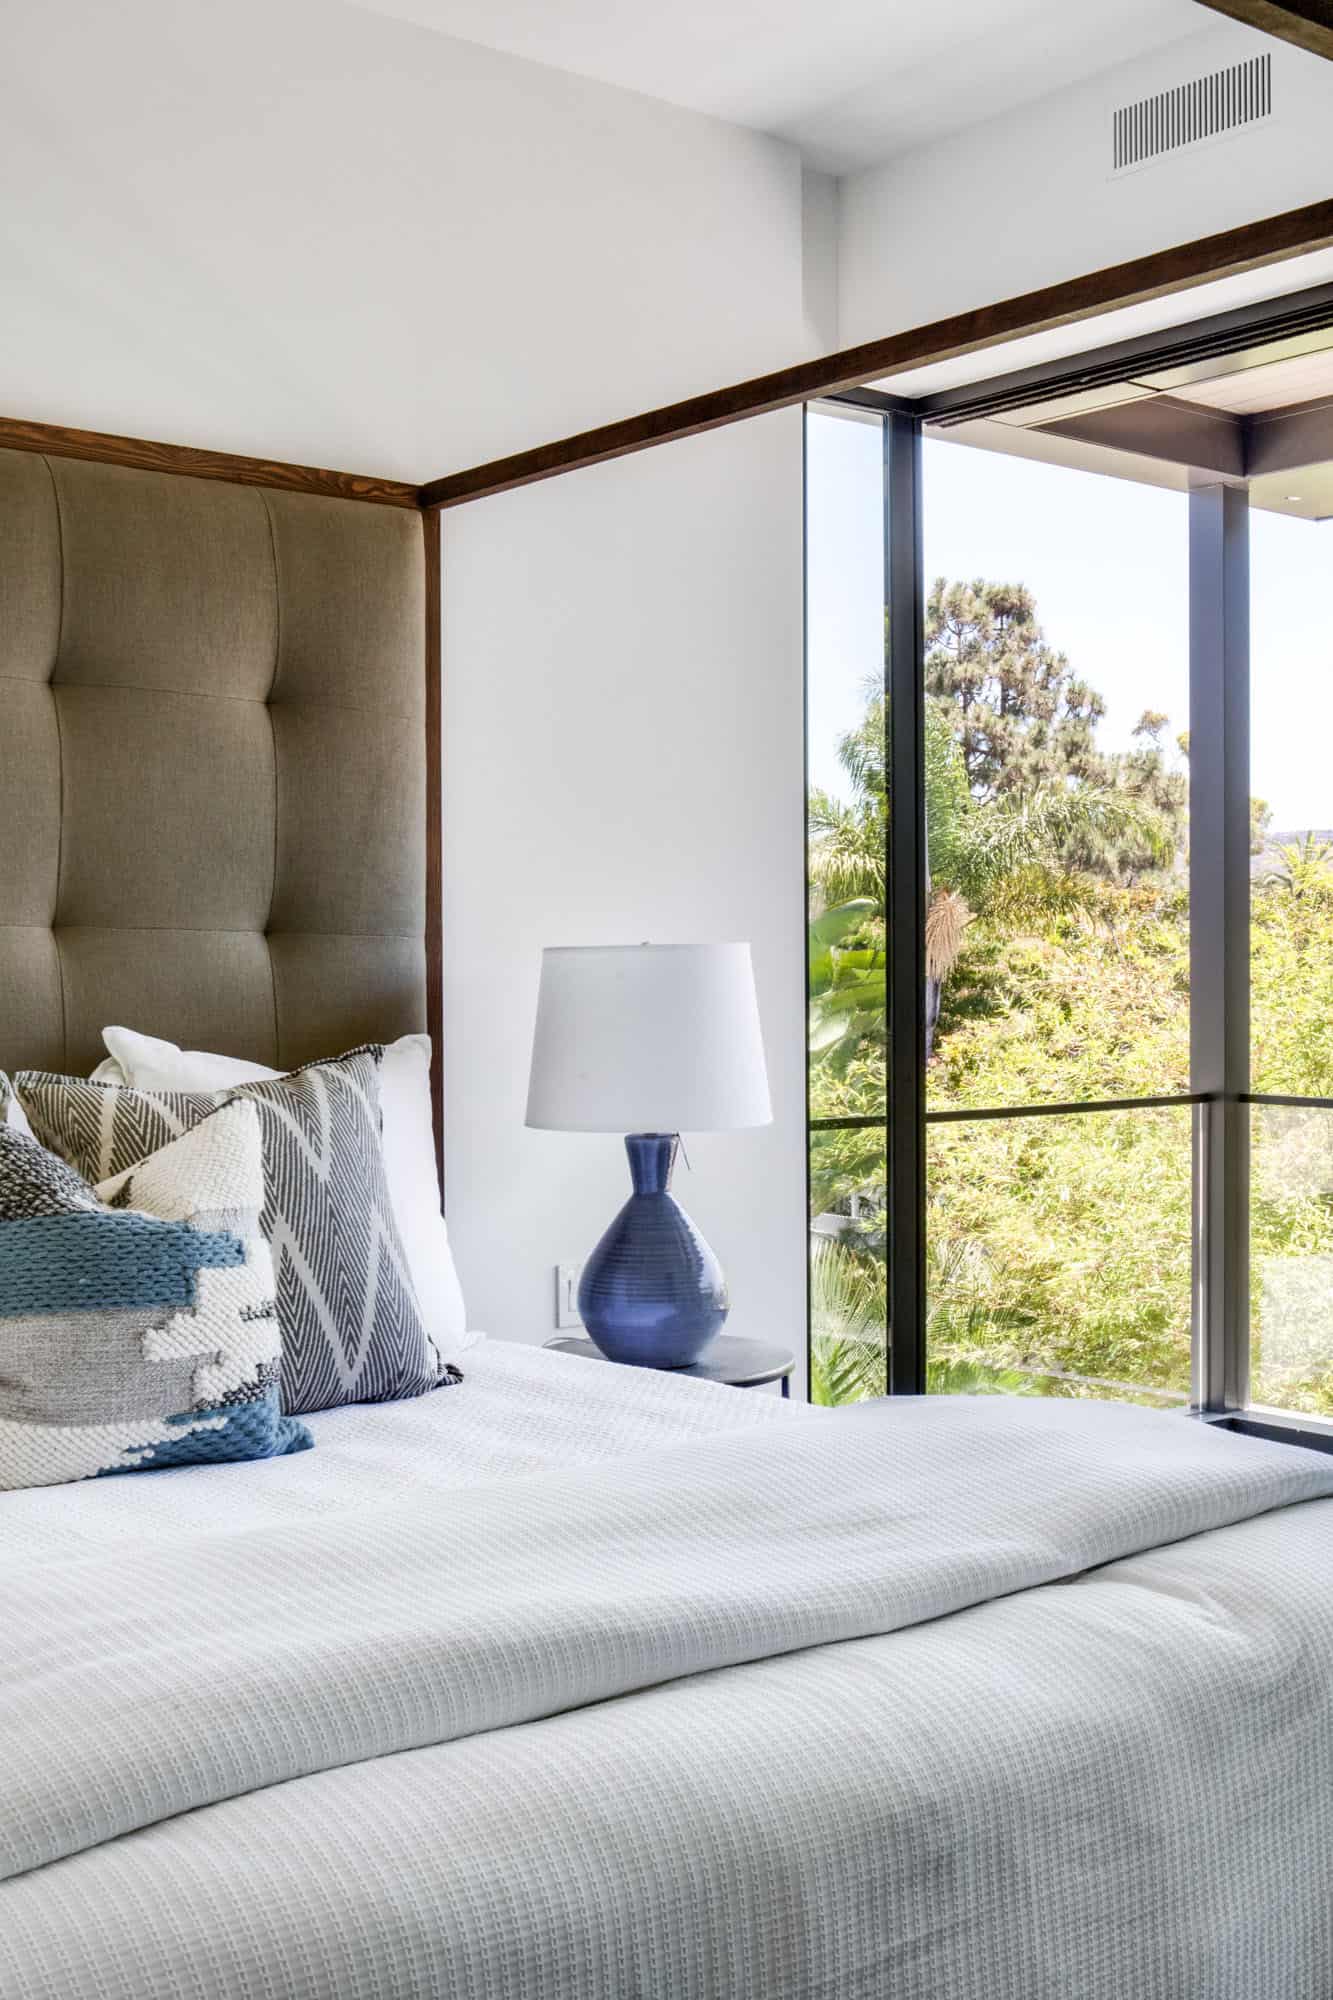 modern-beach-style-bedroom